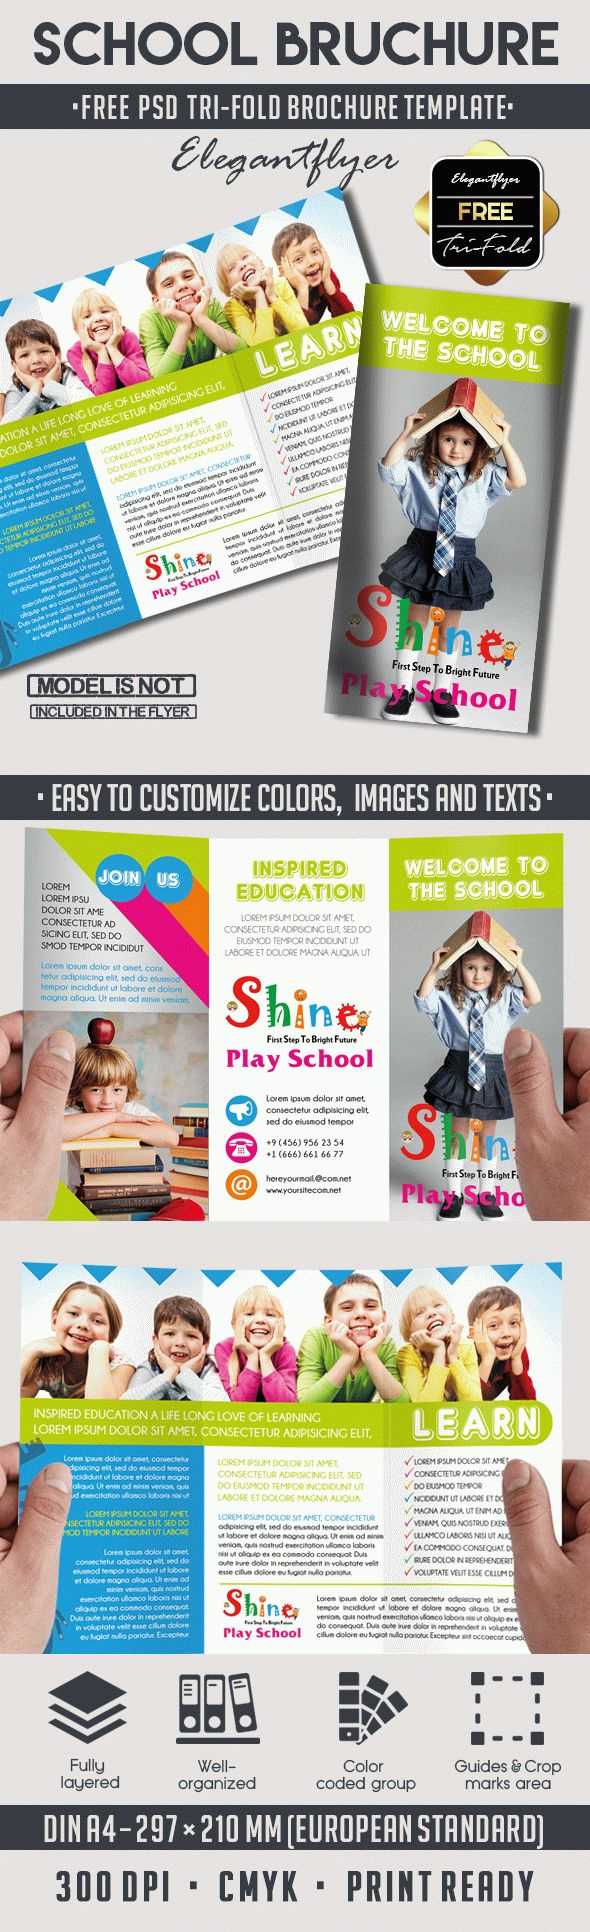 School – Free Psd Tri Fold Psd Brochure Template Regarding Play School Brochure Templates